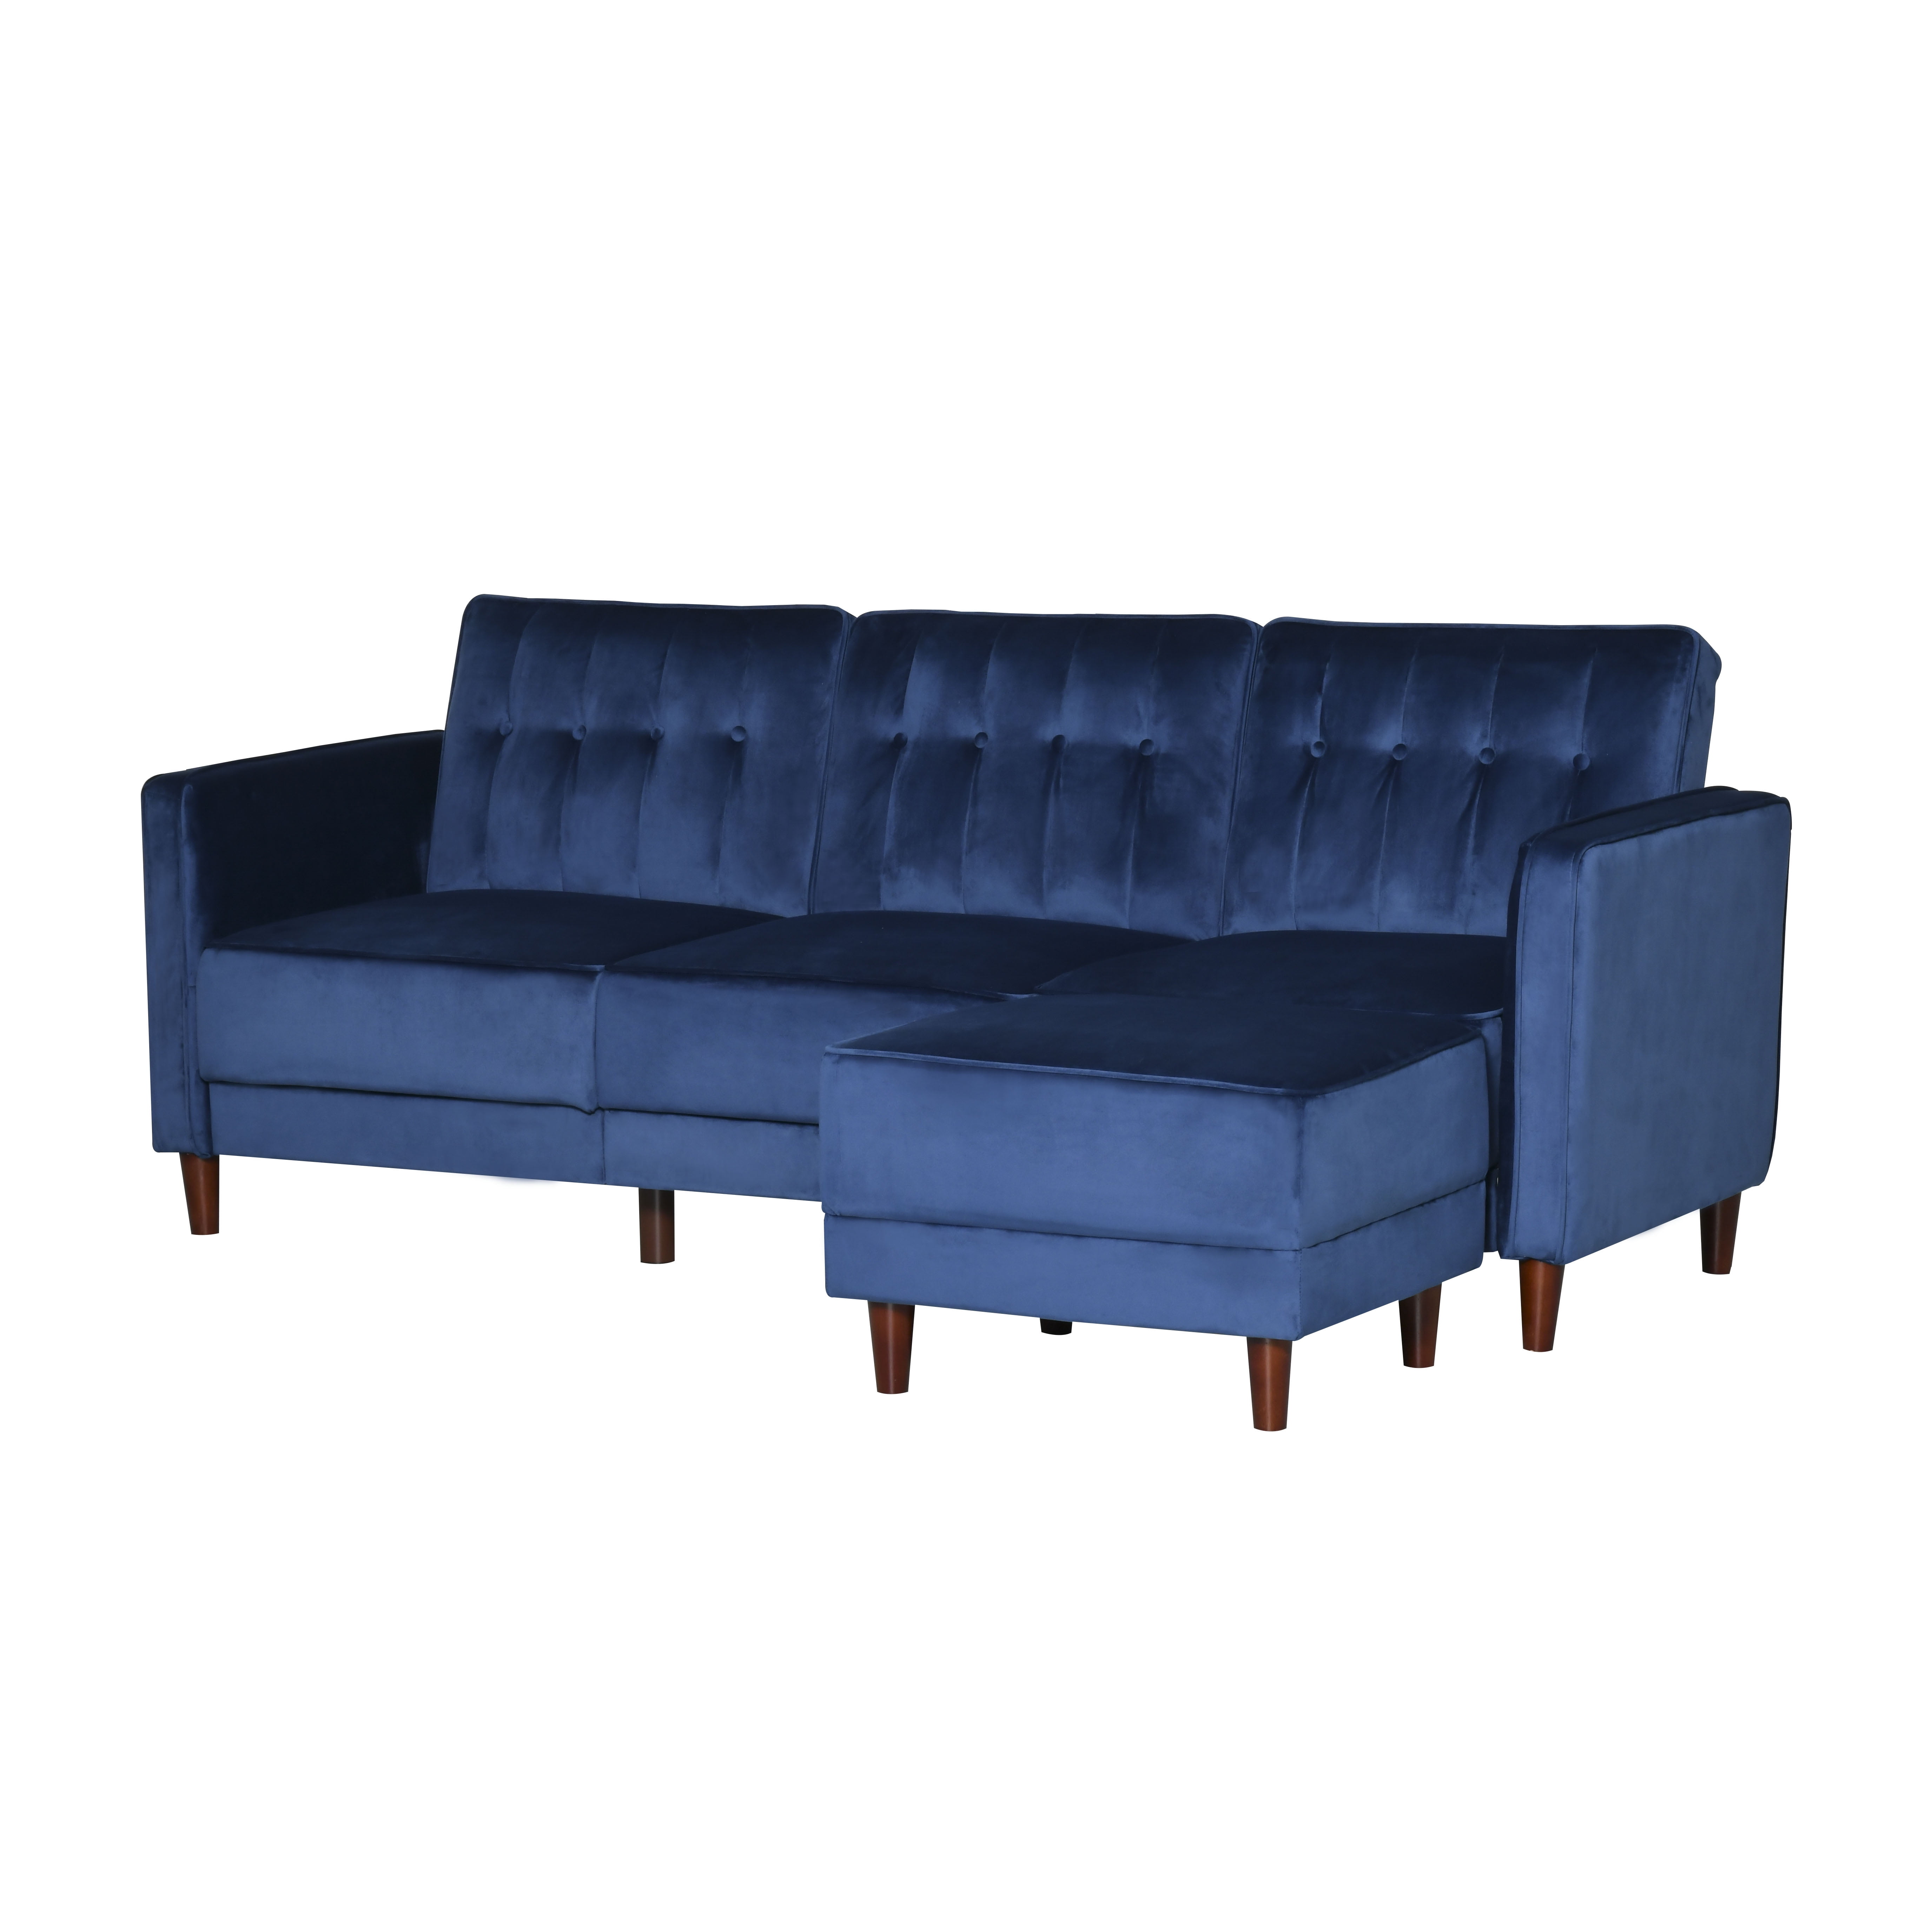 Homcom Upholstered L Shaped Sofa Bed, Homcom Linen Sofa Bed Chaise Lounge Set